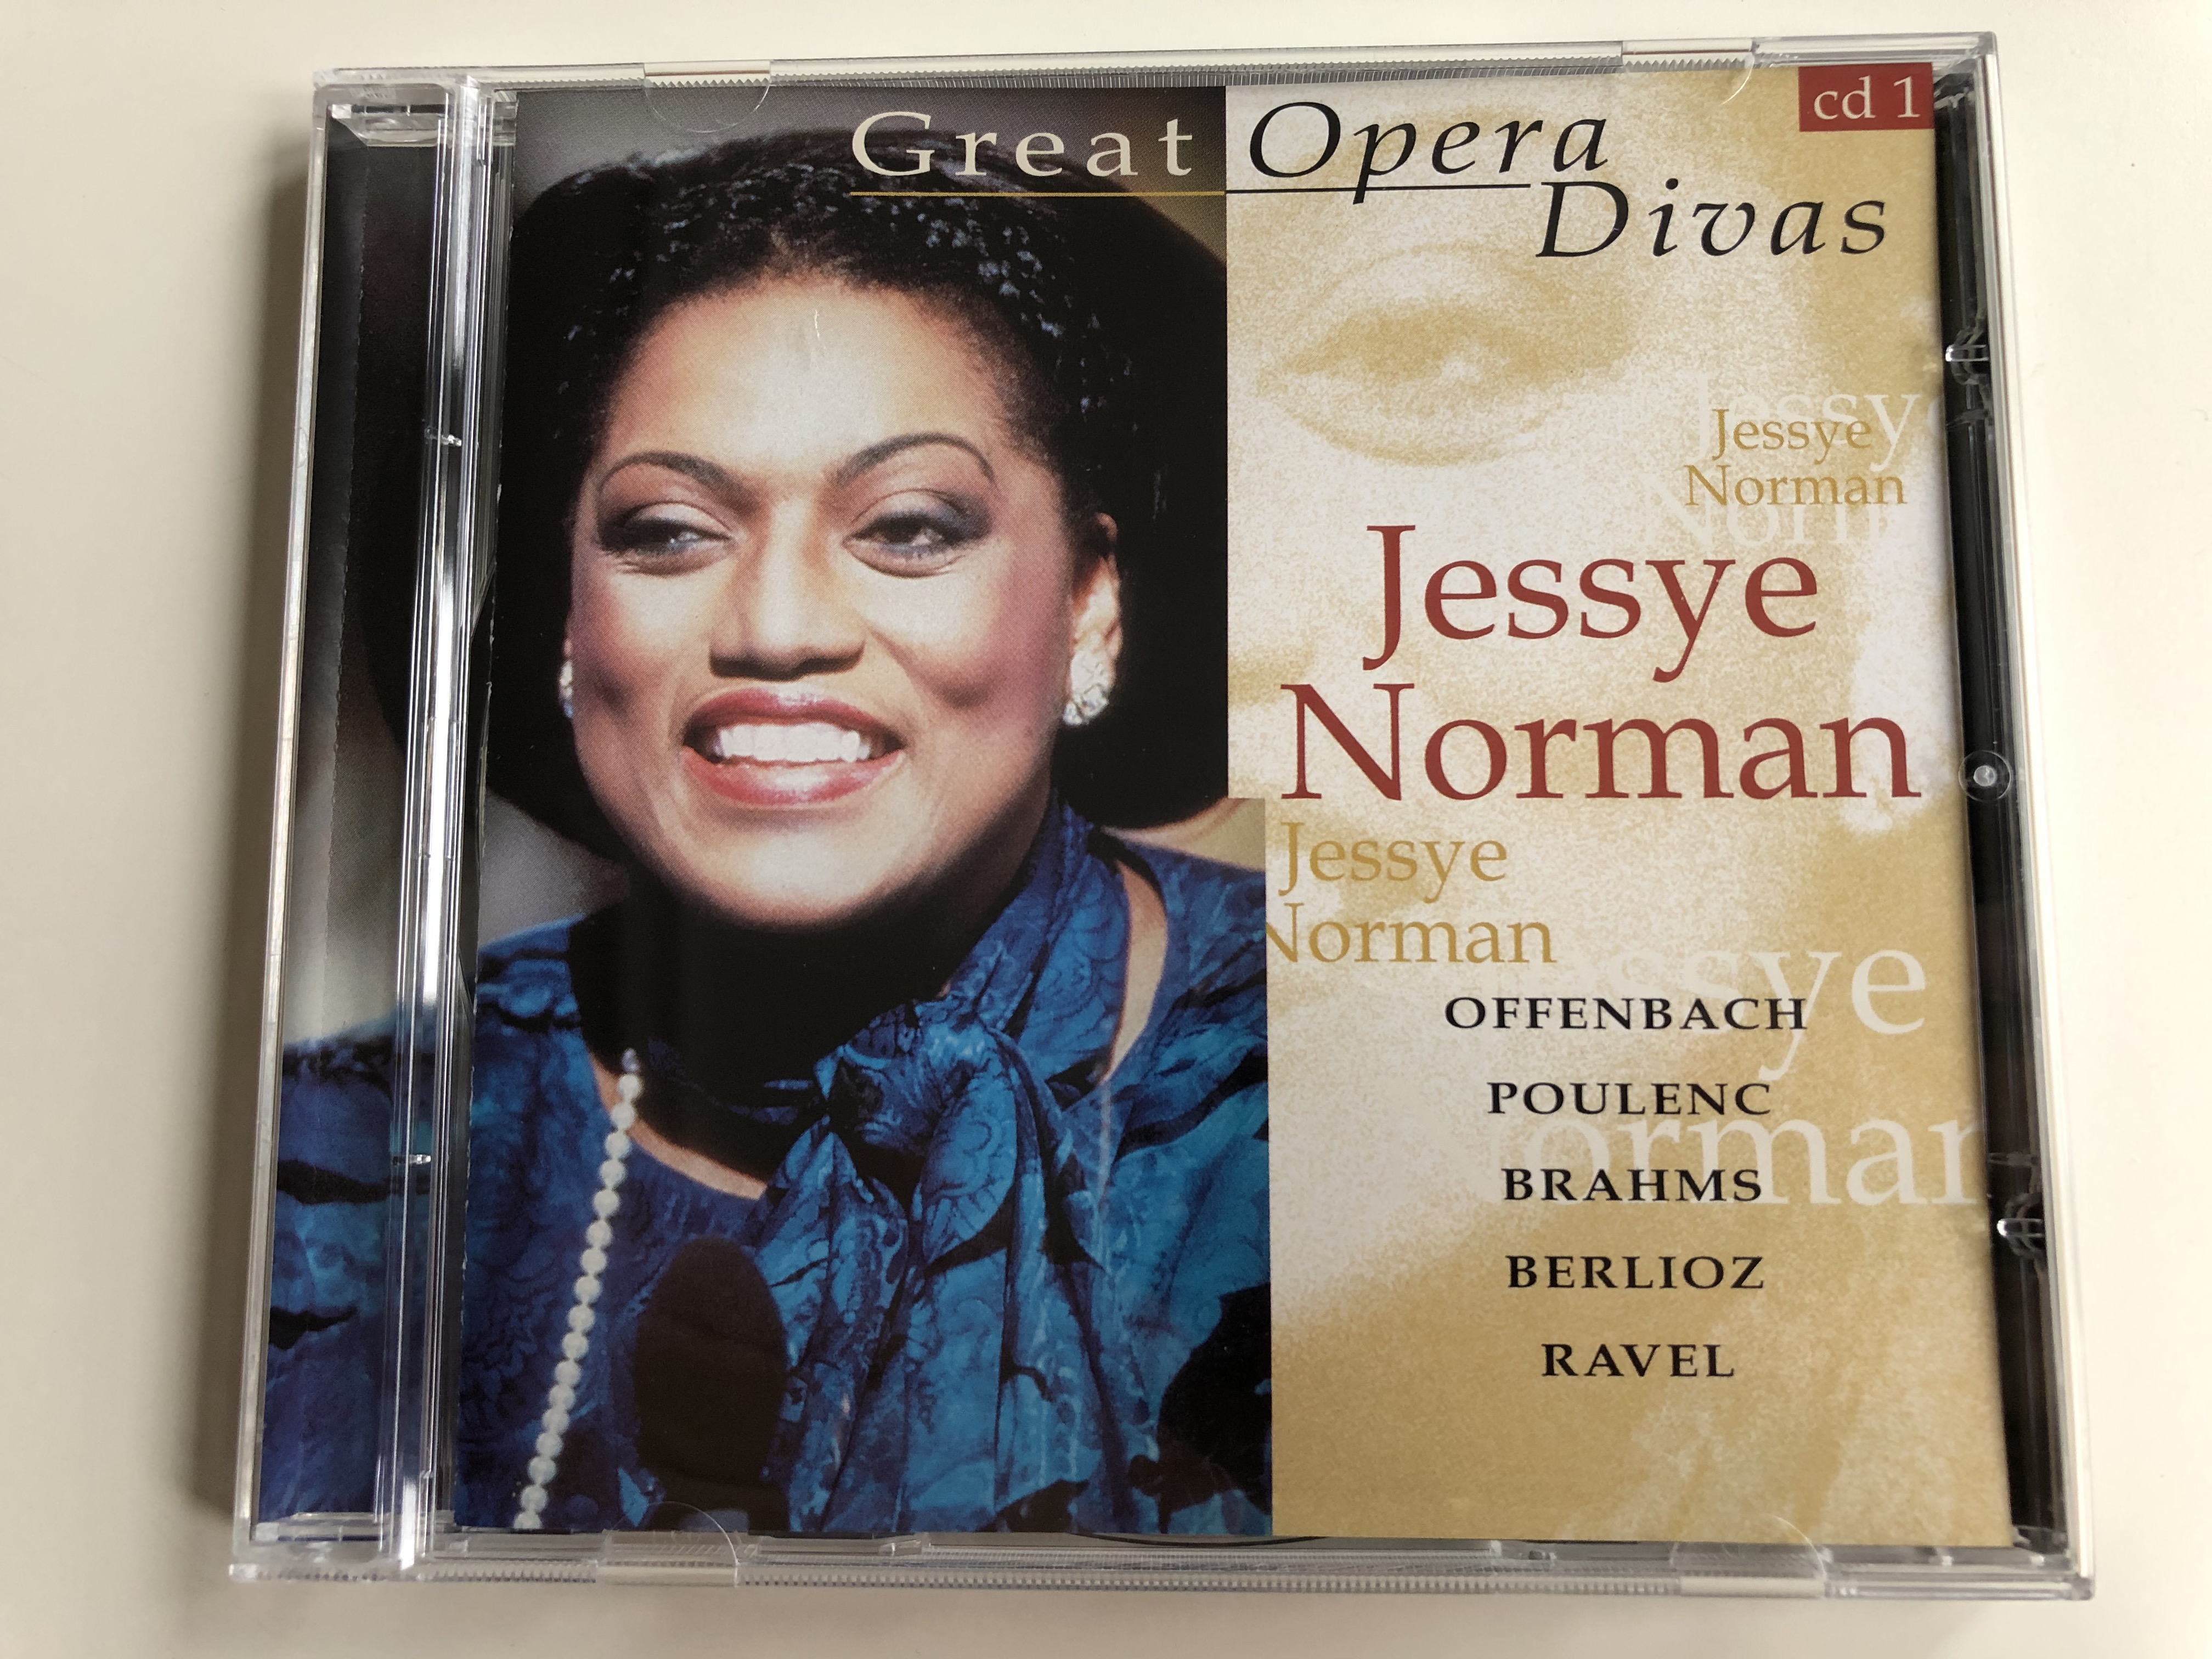 great-opera-divas-cd-1-jessye-norman-offenbach-poulenc-brahms-berlioz-ravel-disky-classics-audio-cd-1999-bx-706242-1-.jpg